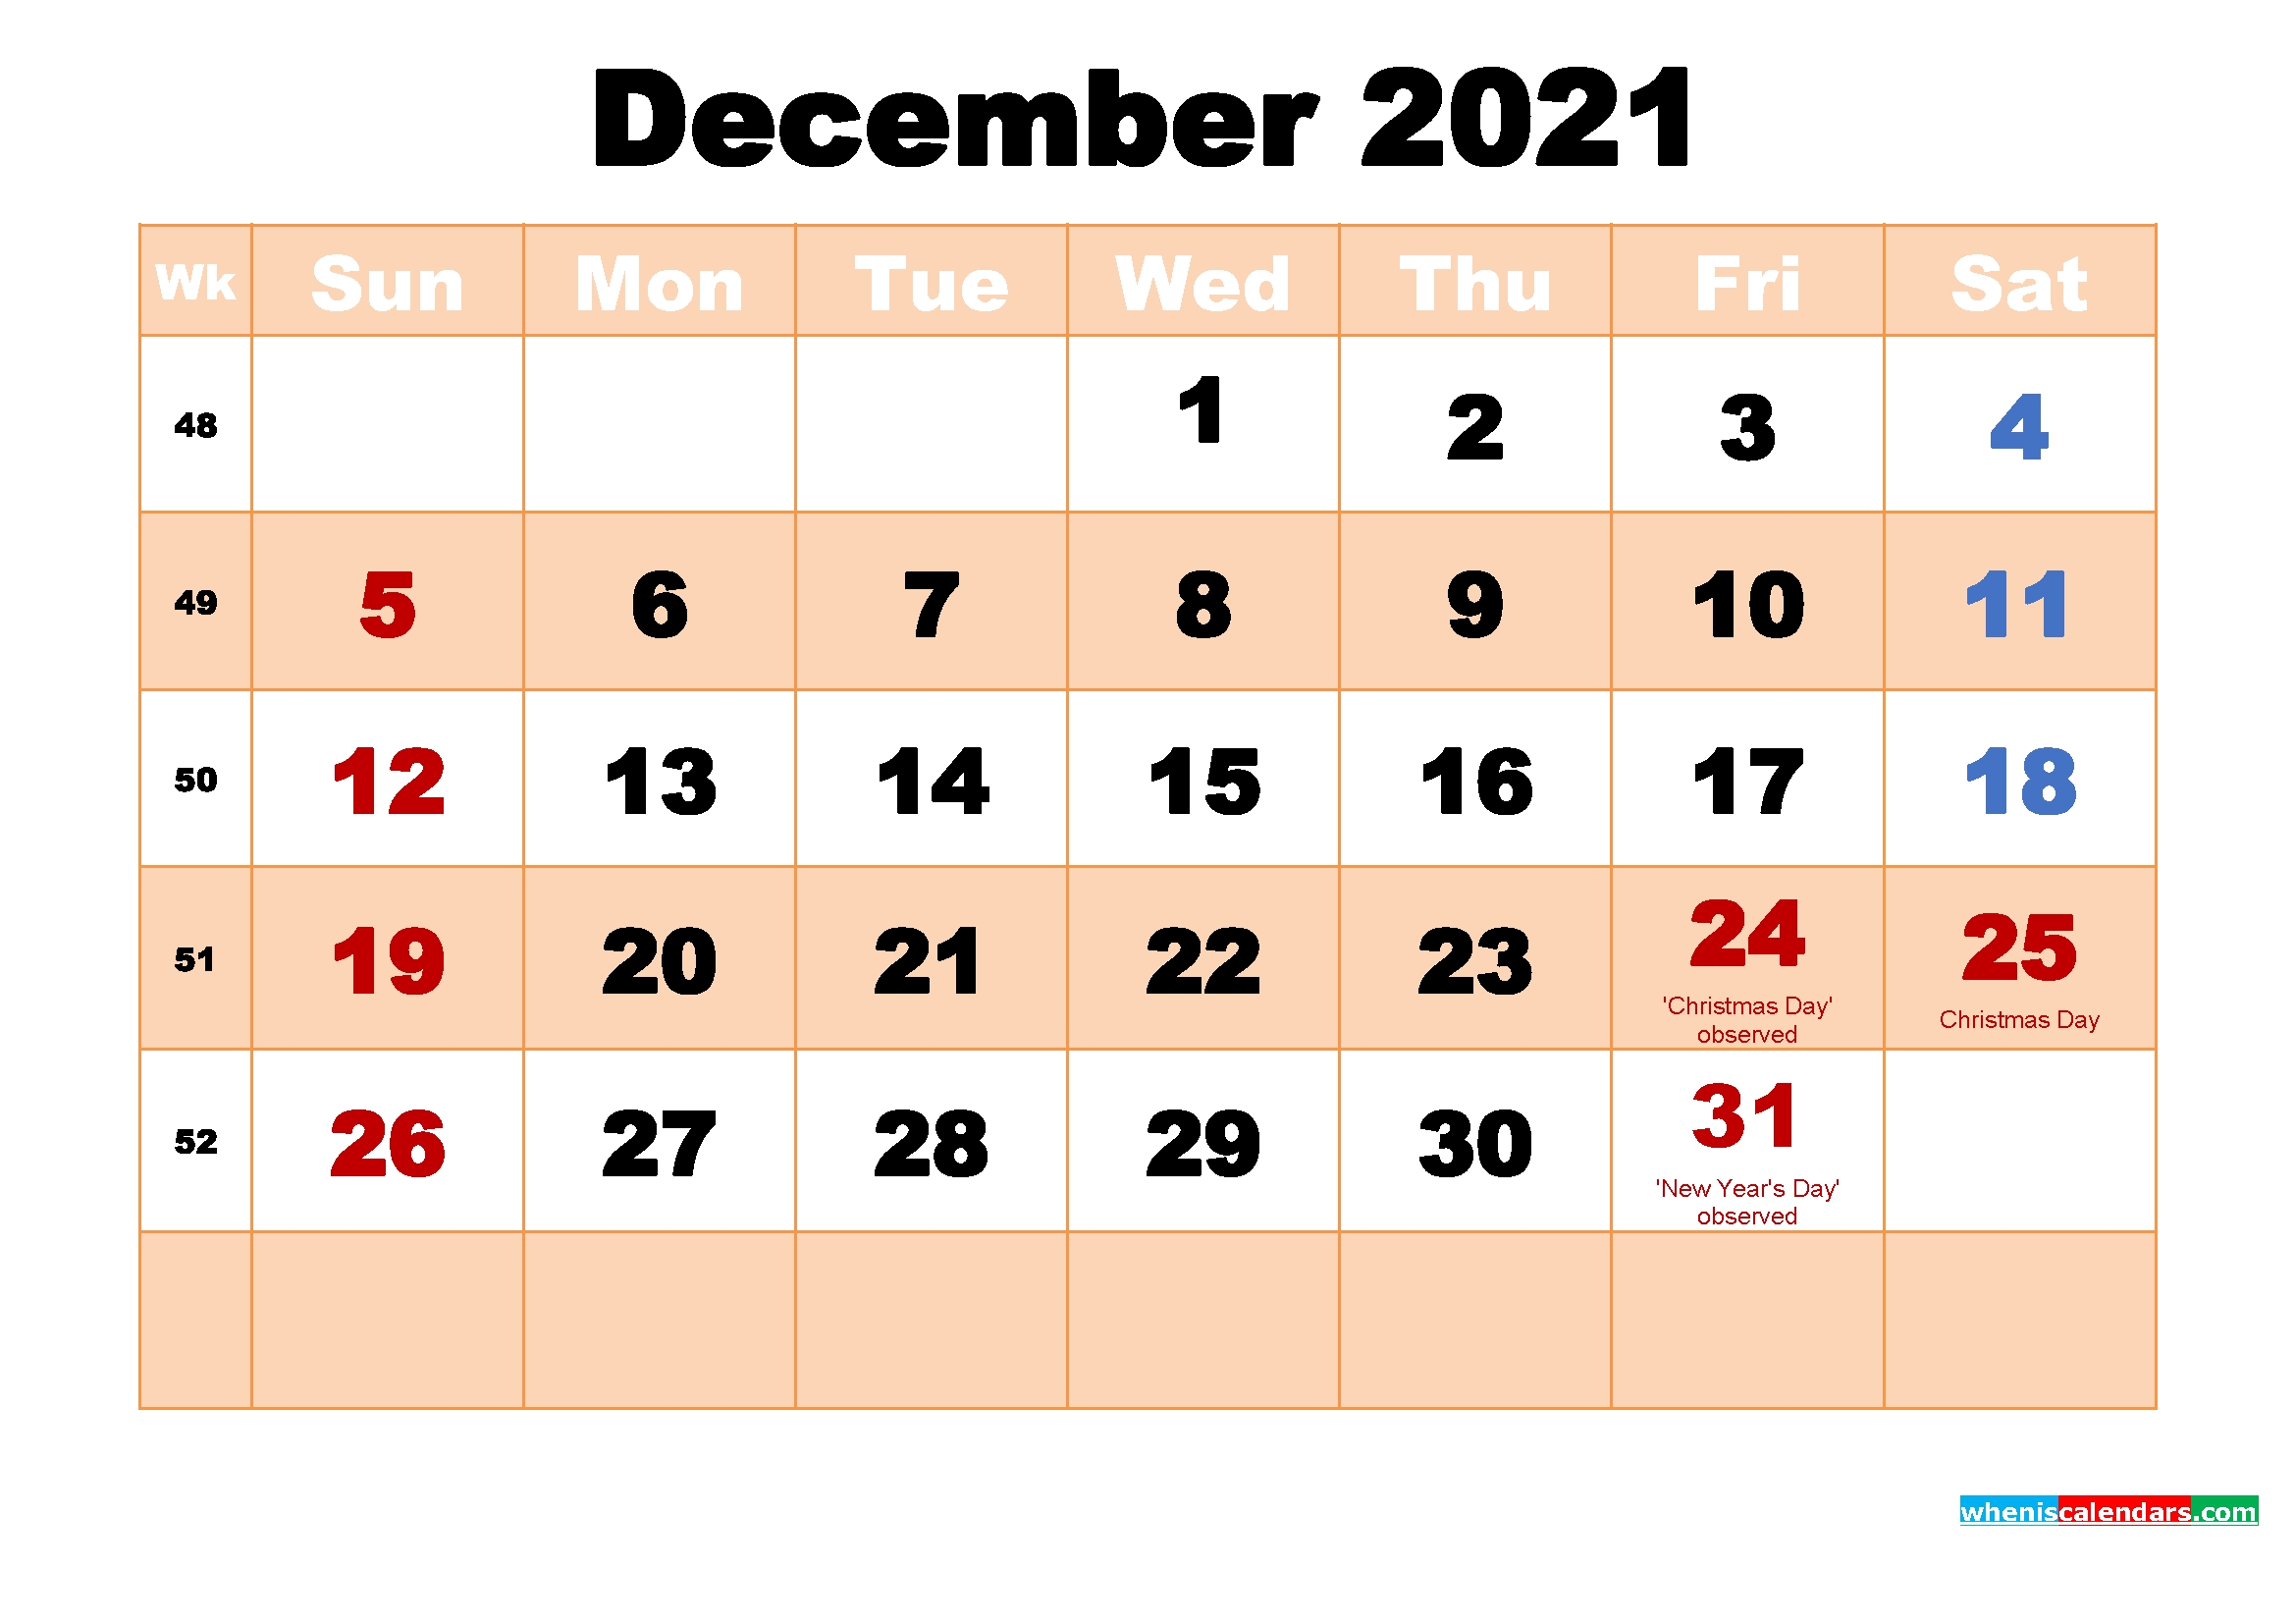 December 2021 Printable Calendar With Holidays | Free Printable 2020 Calendar With Holidays December 2021 Calendar Template